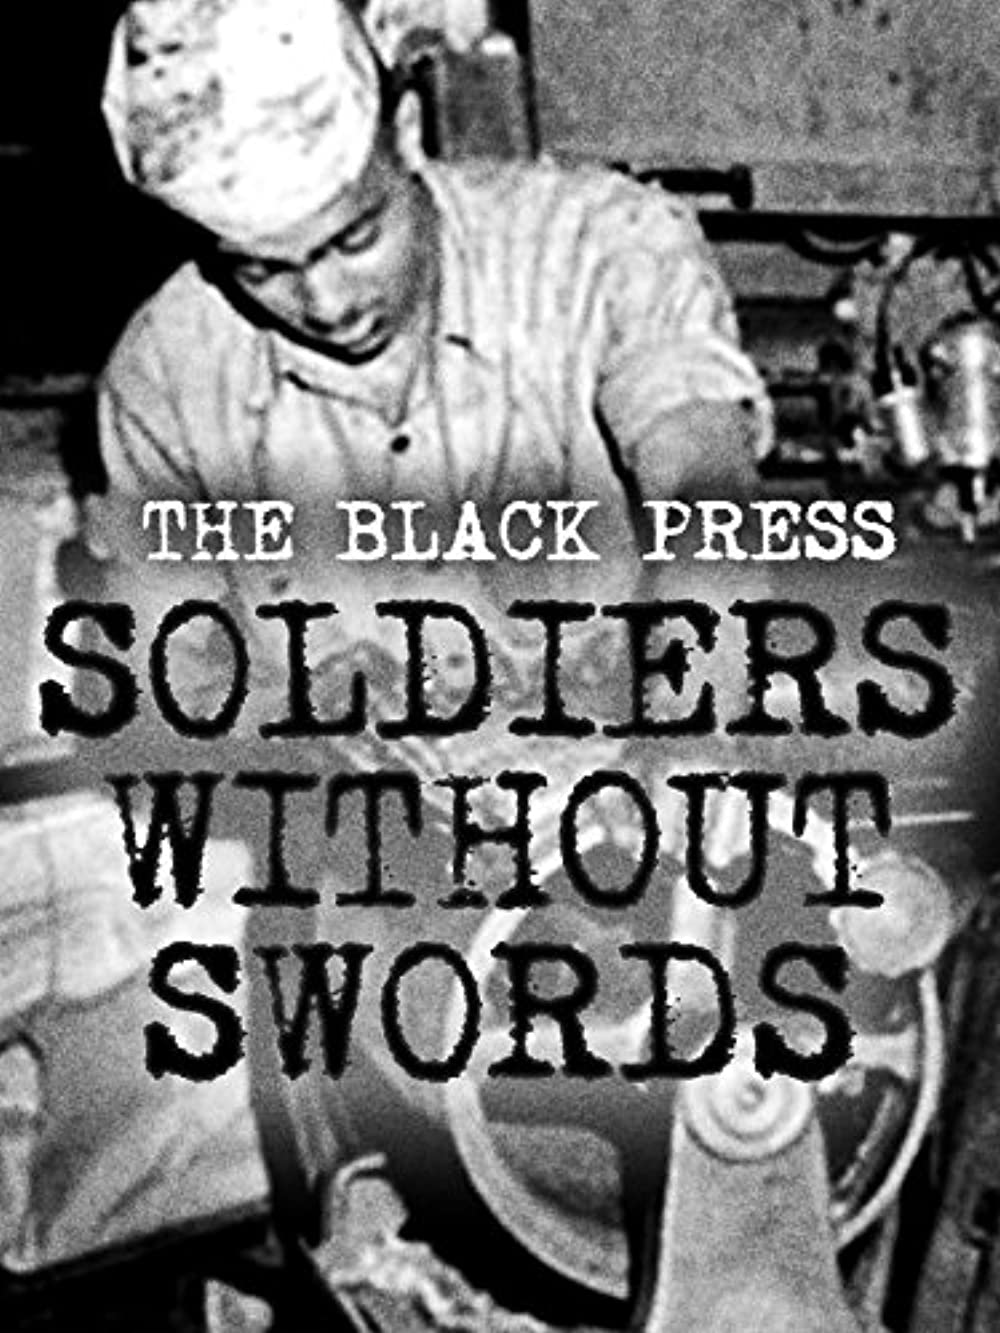 The black press